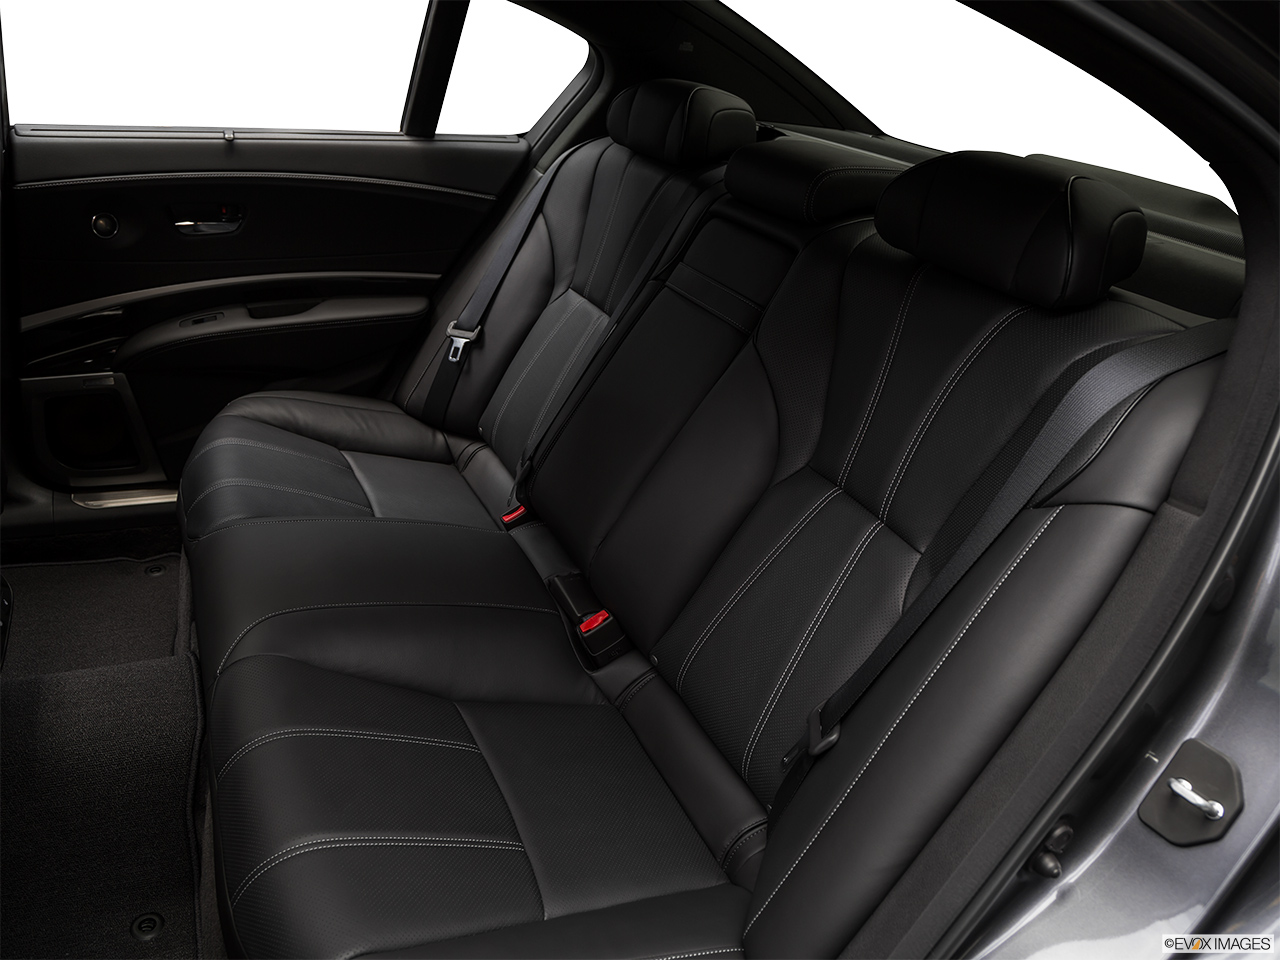 2020 Acura RLX Sport Hybrid SH-AWD Rear seats from Drivers Side. 